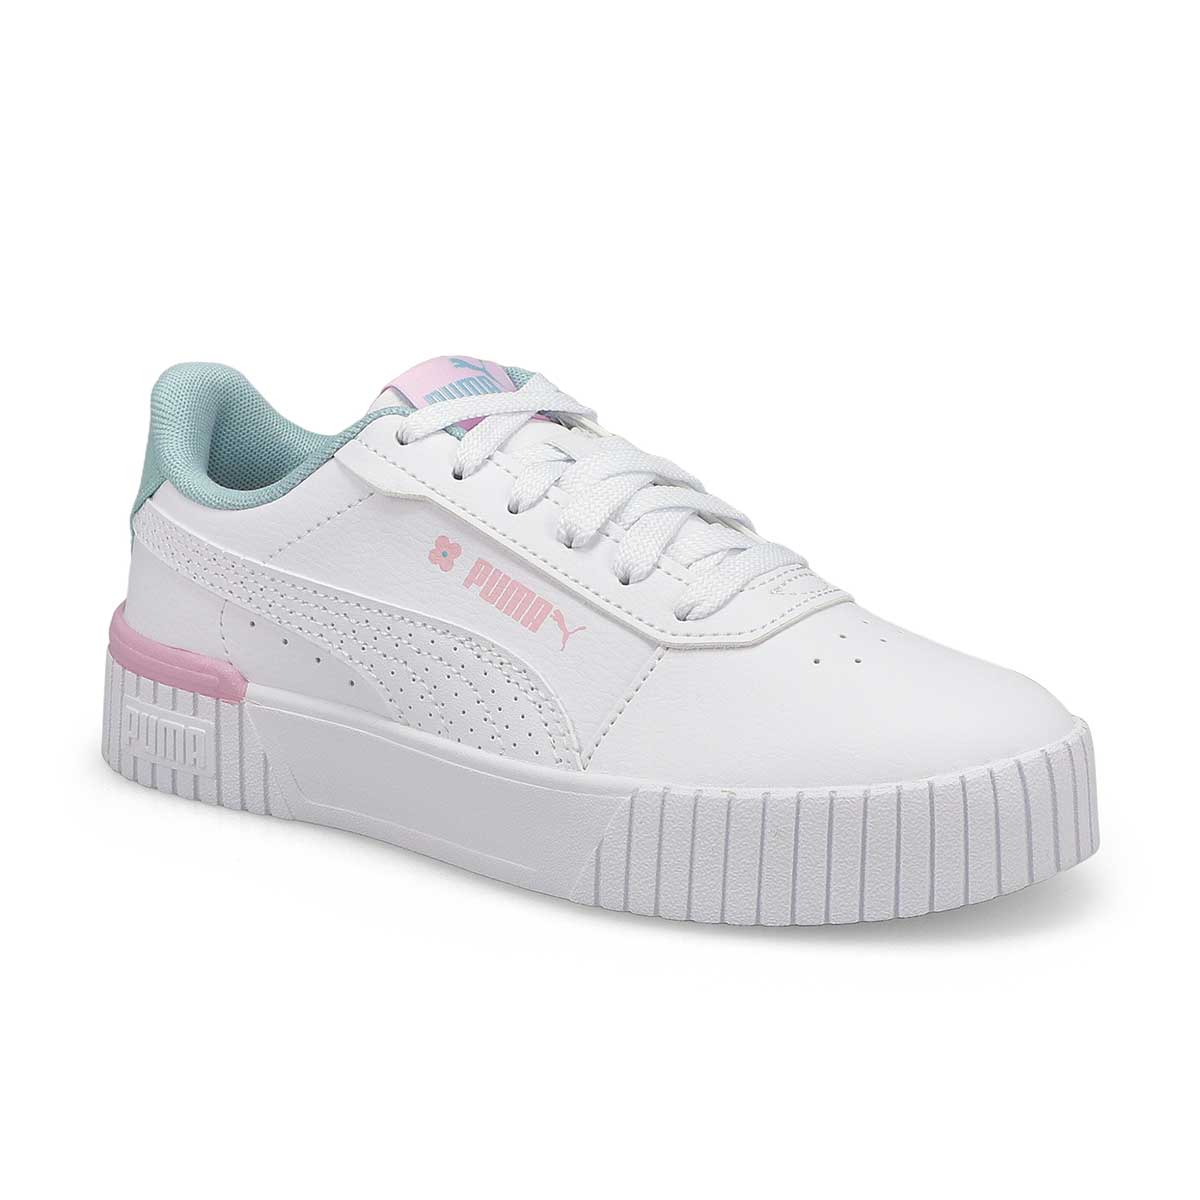 Girls' Carina 2.0 Tropical Jr Sneaker - White/Turq